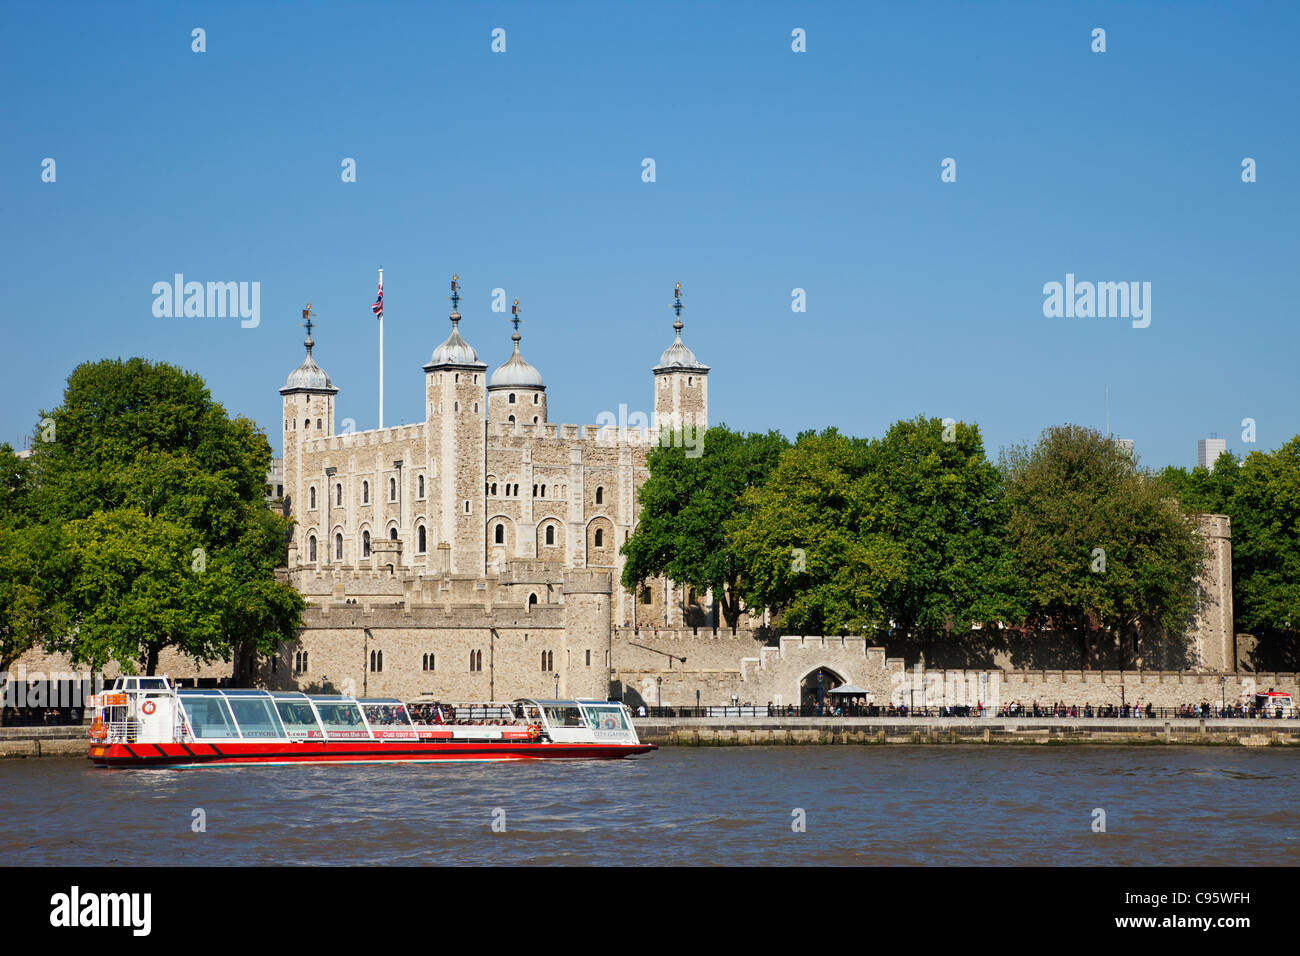 England, London, Tower of London Stock Photo